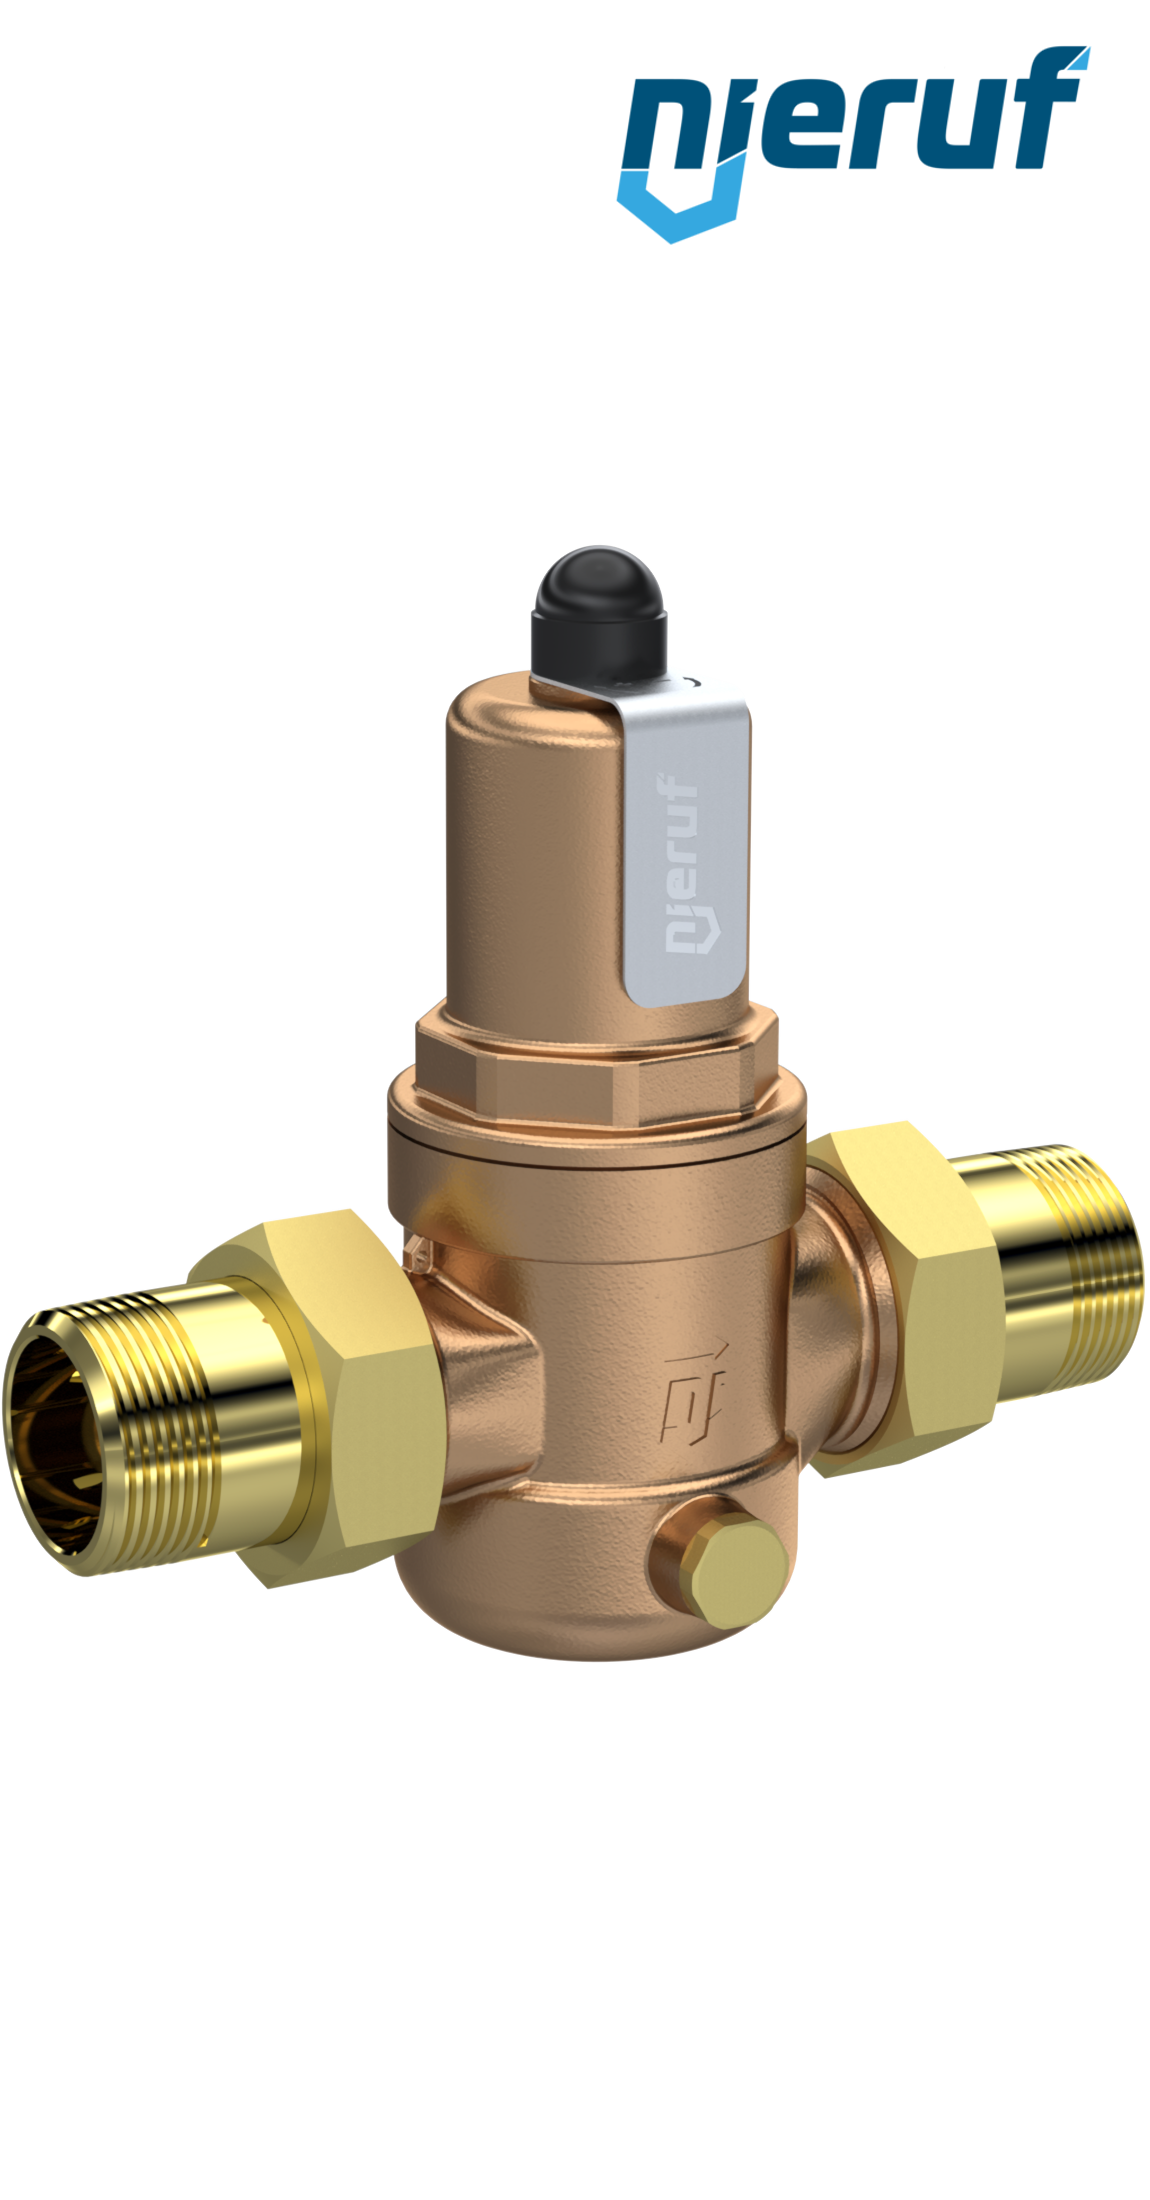 pressure reducing valve 1/2" inch male thread DM02 gunmetall FKM 0.5 - 2.0 bar